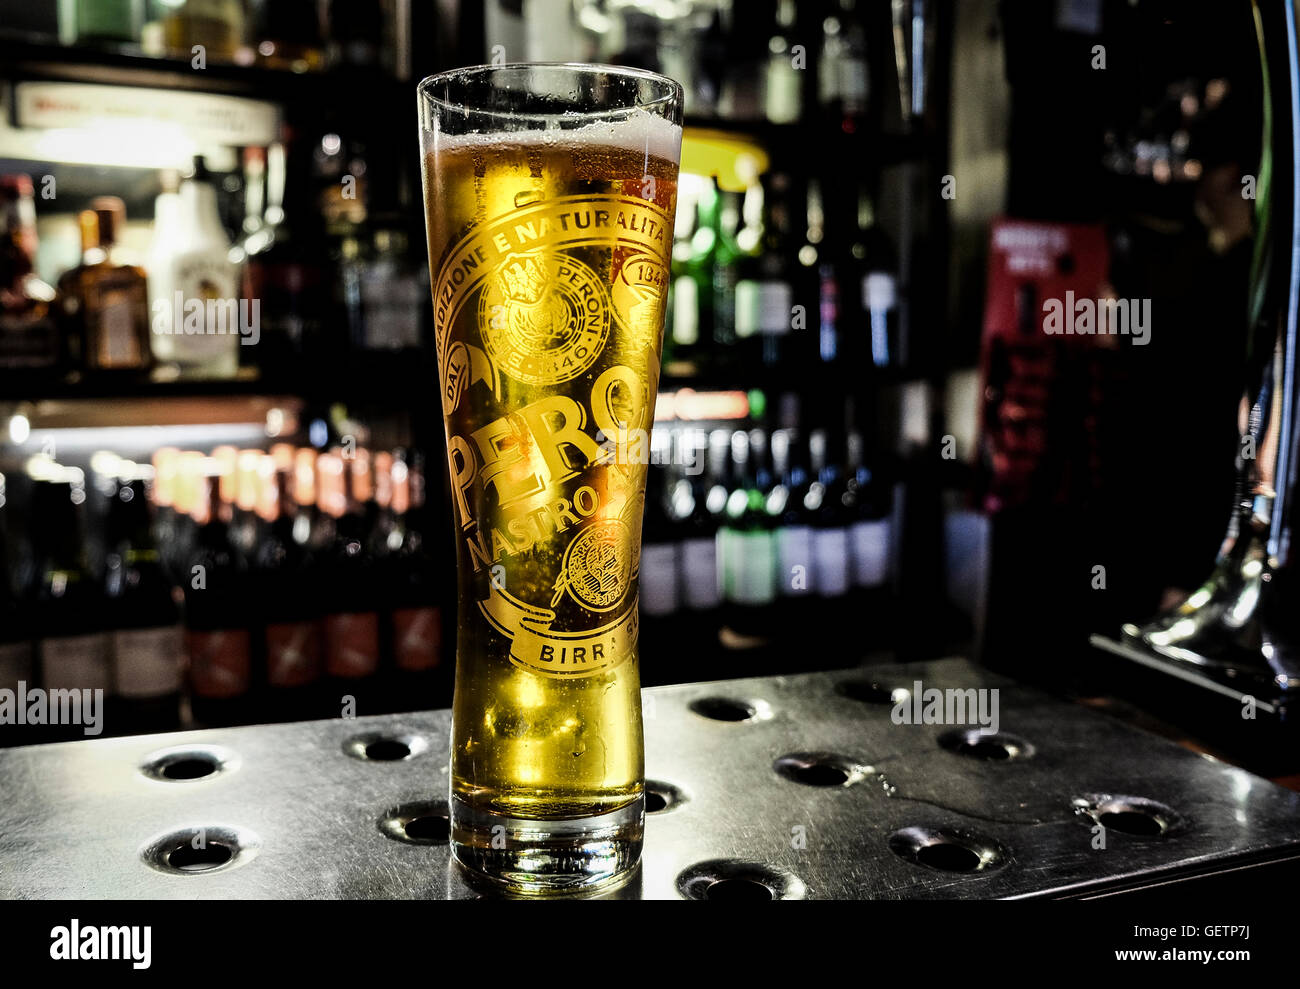 https://c8.alamy.com/comp/GETP7J/a-pint-glass-of-peroni-beer-on-a-bar-in-a-pub-GETP7J.jpg